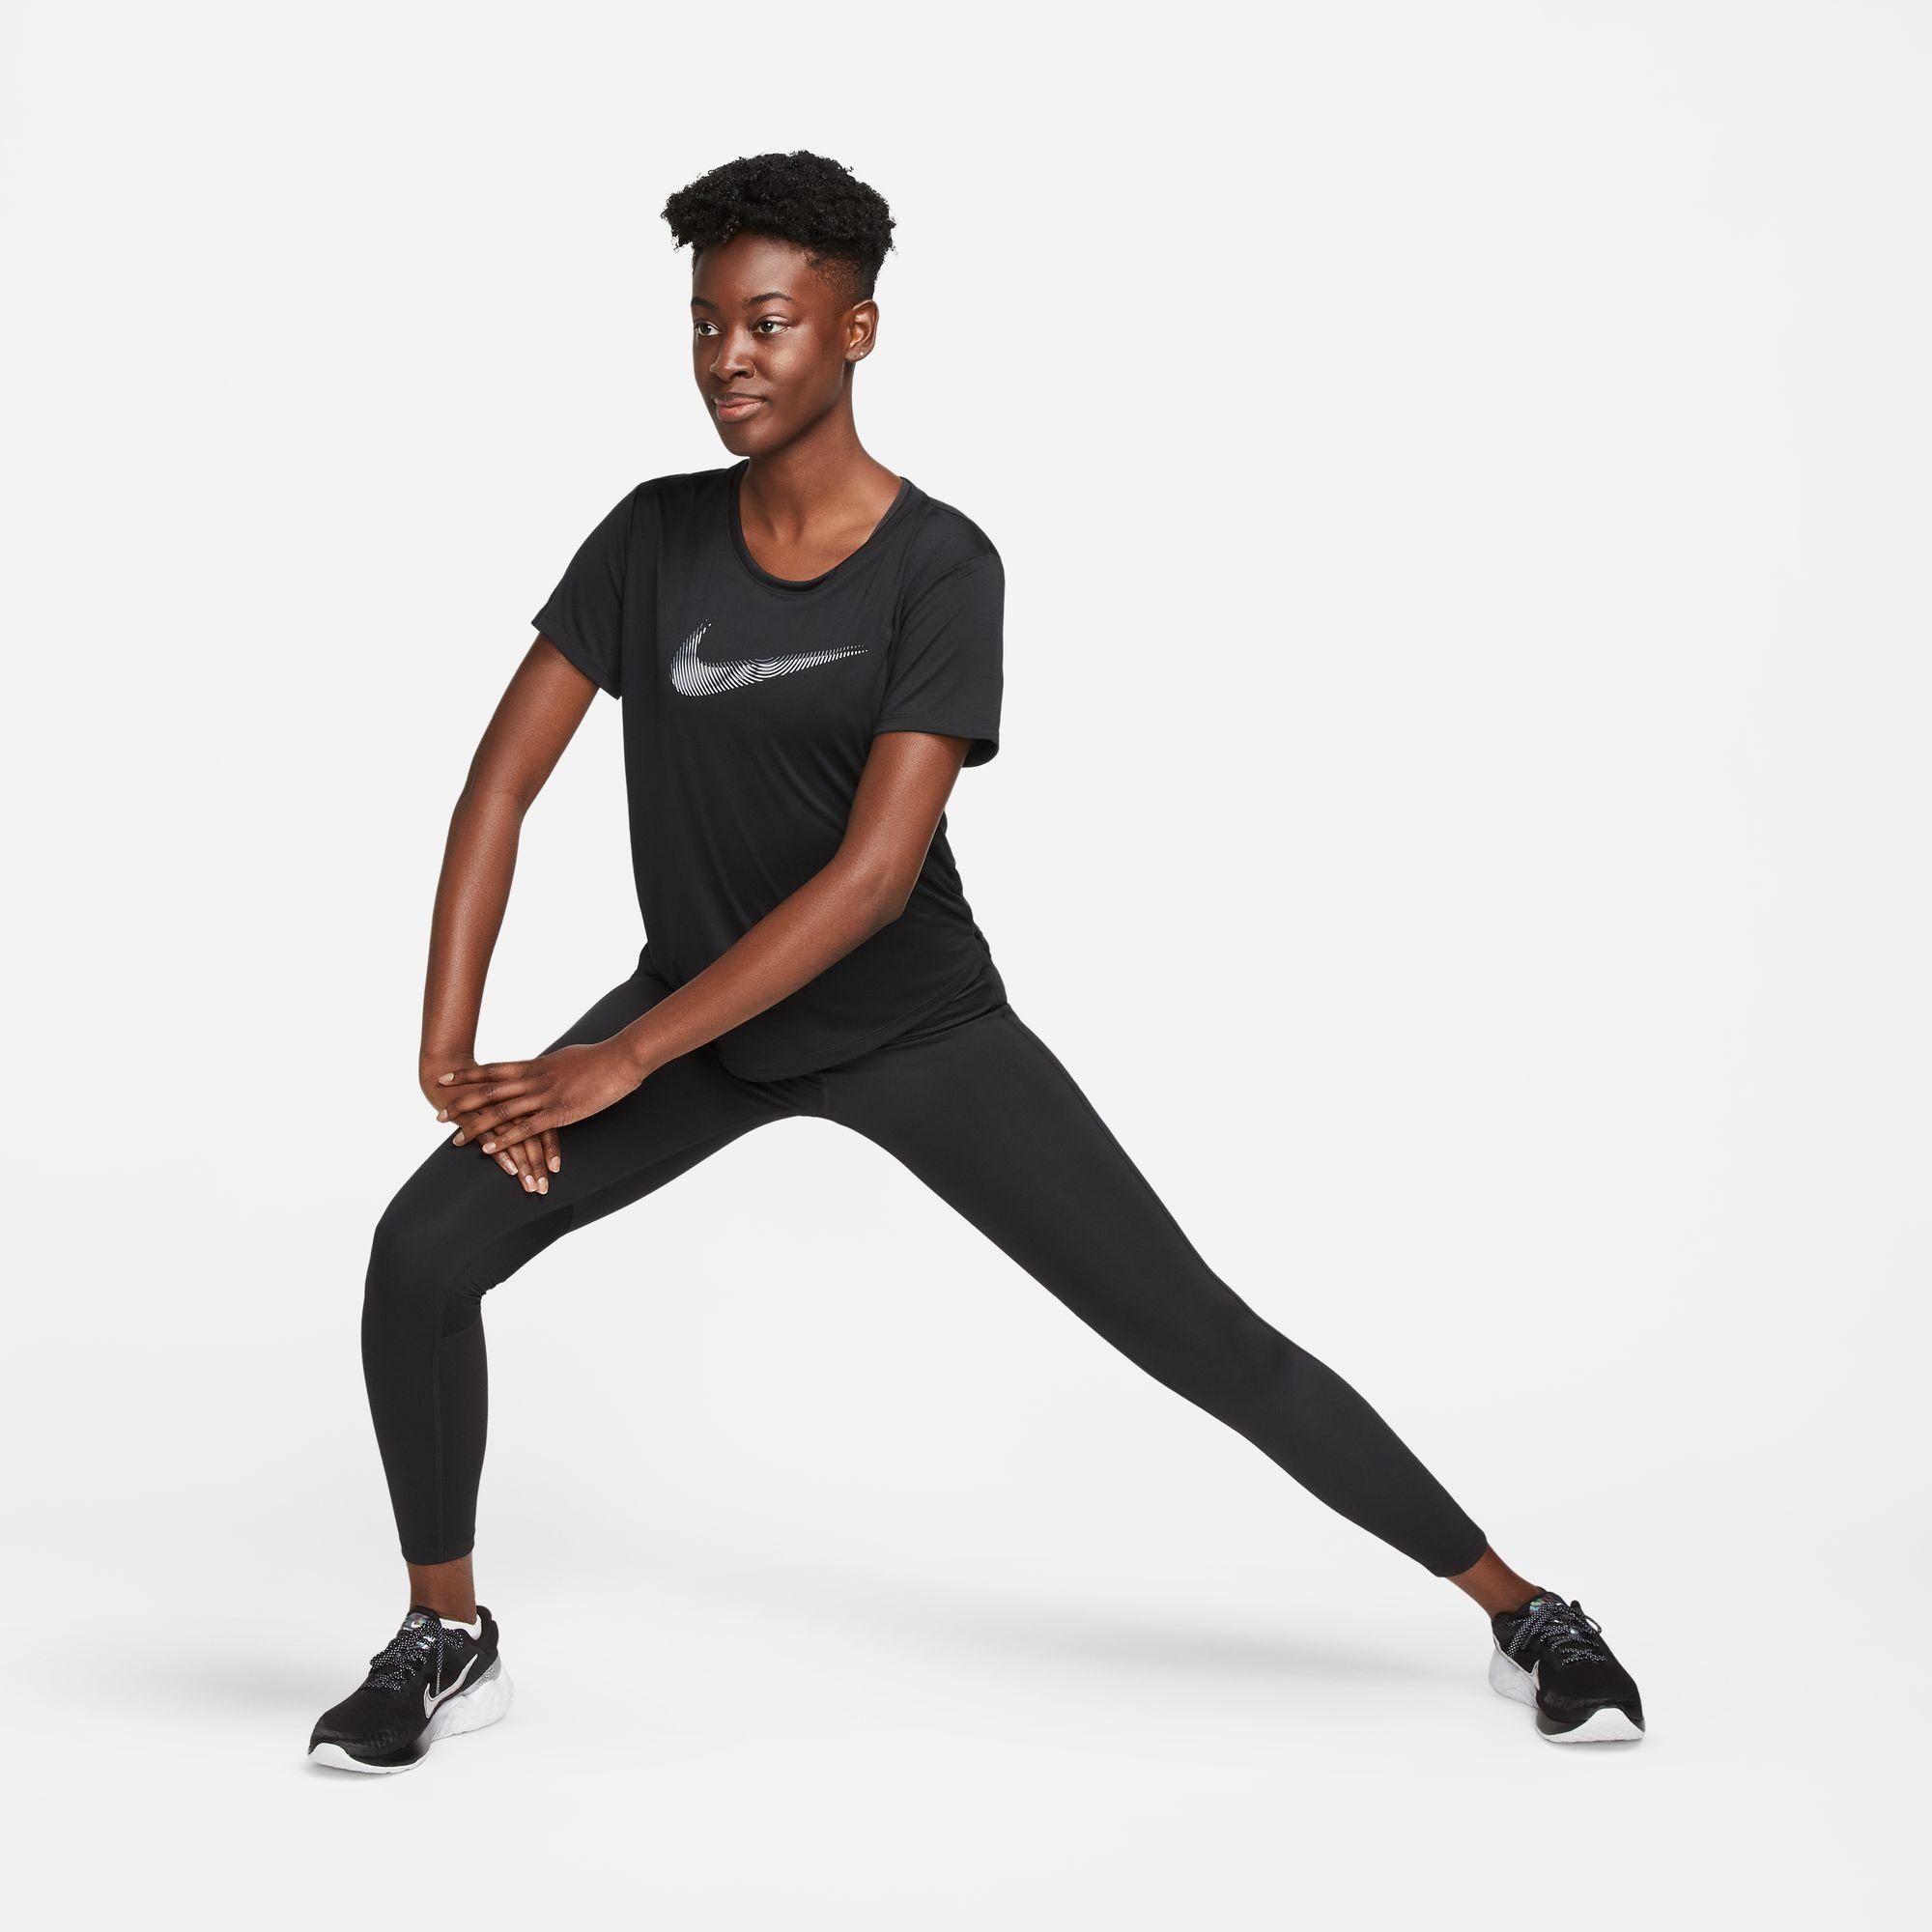 Nike Laufshirt RUNNING TOP BLACK/COOL SHORT-SLEEVE GREY DRI-FIT SWOOSH WOMEN'S